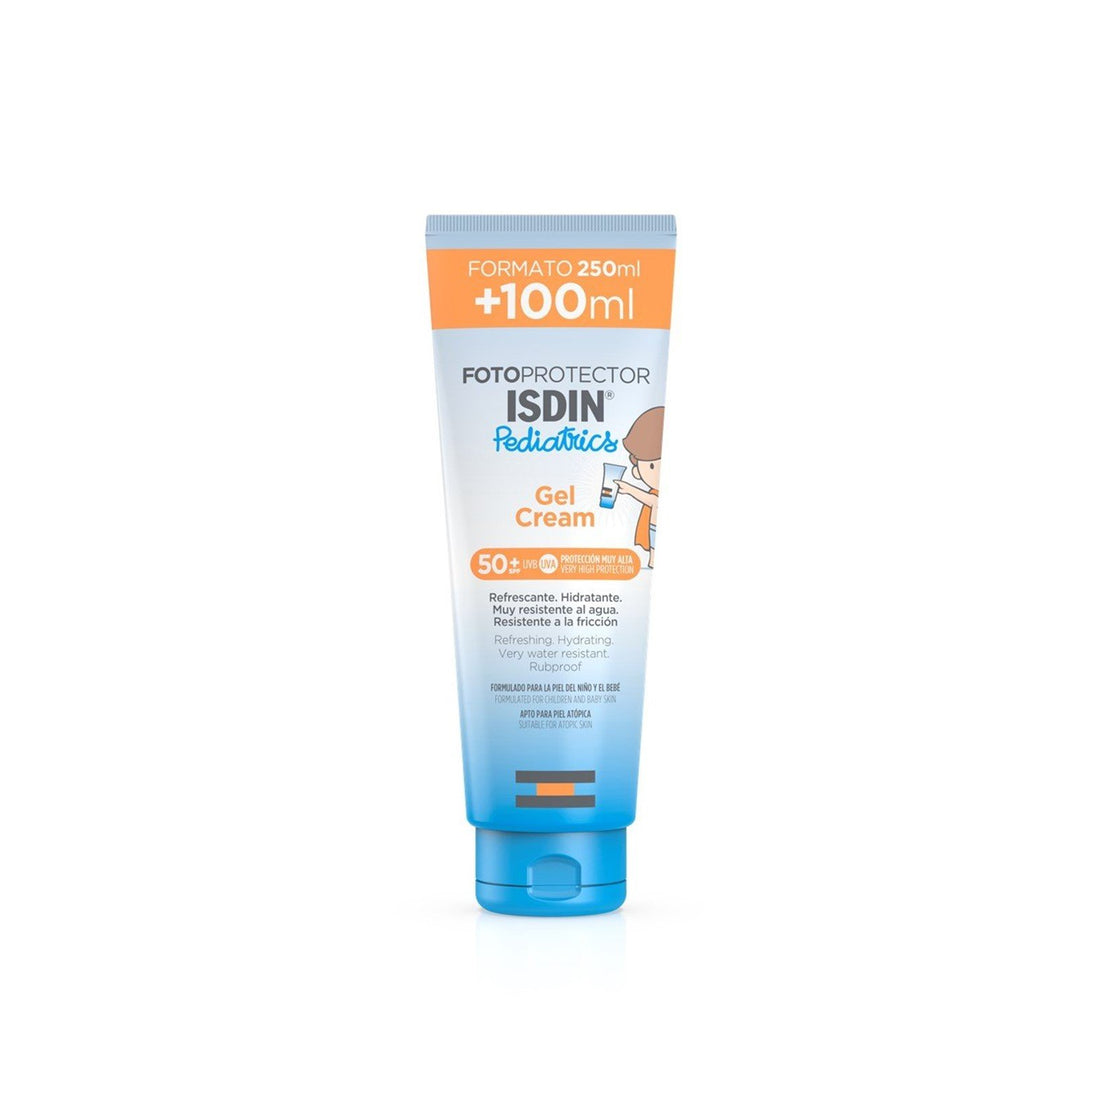 ISDIN Fotoprotector Gel Crème Pédiatrique SPF50+ 250 ml